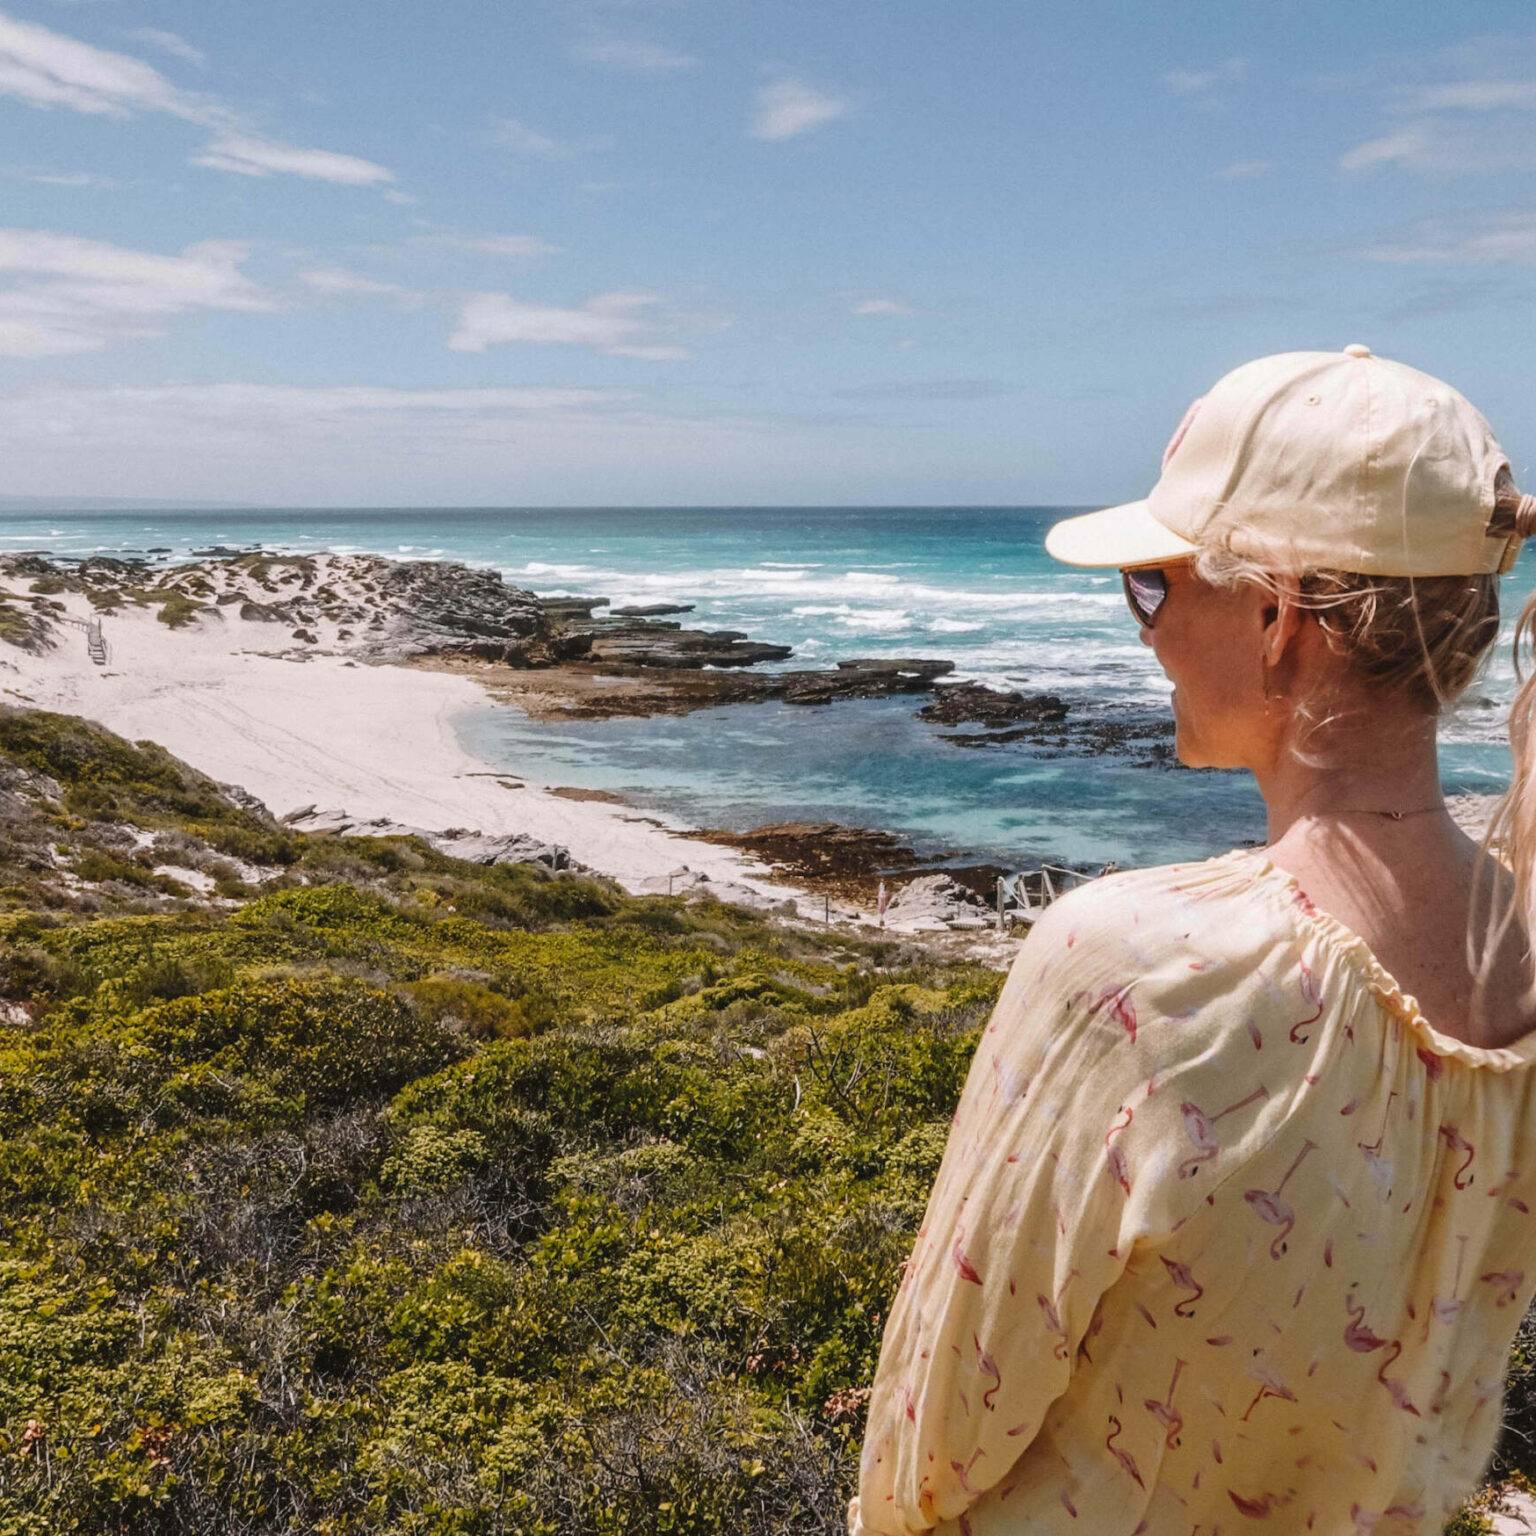 Bloggerin Nina blickt über das De Hoop Nature Reservat mit blauem Meer in Südafrika.